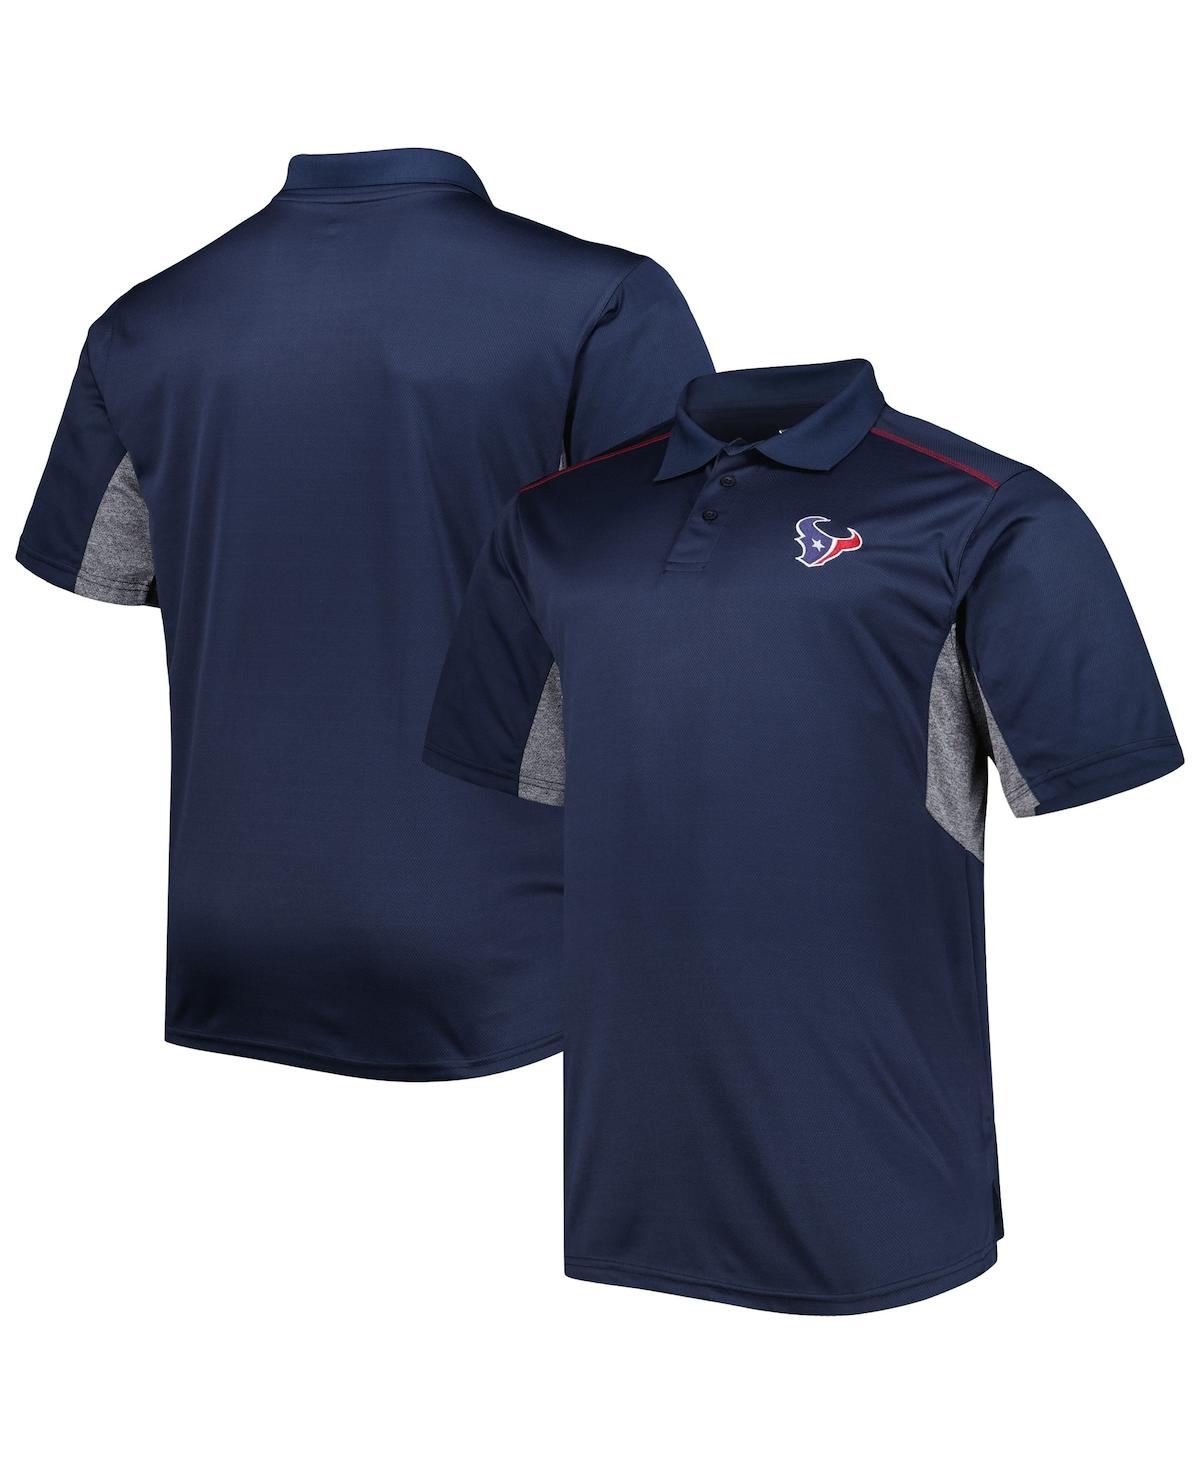 Fanatics Men's Navy Houston Texans Big And Tall Team Color Polo Shirt